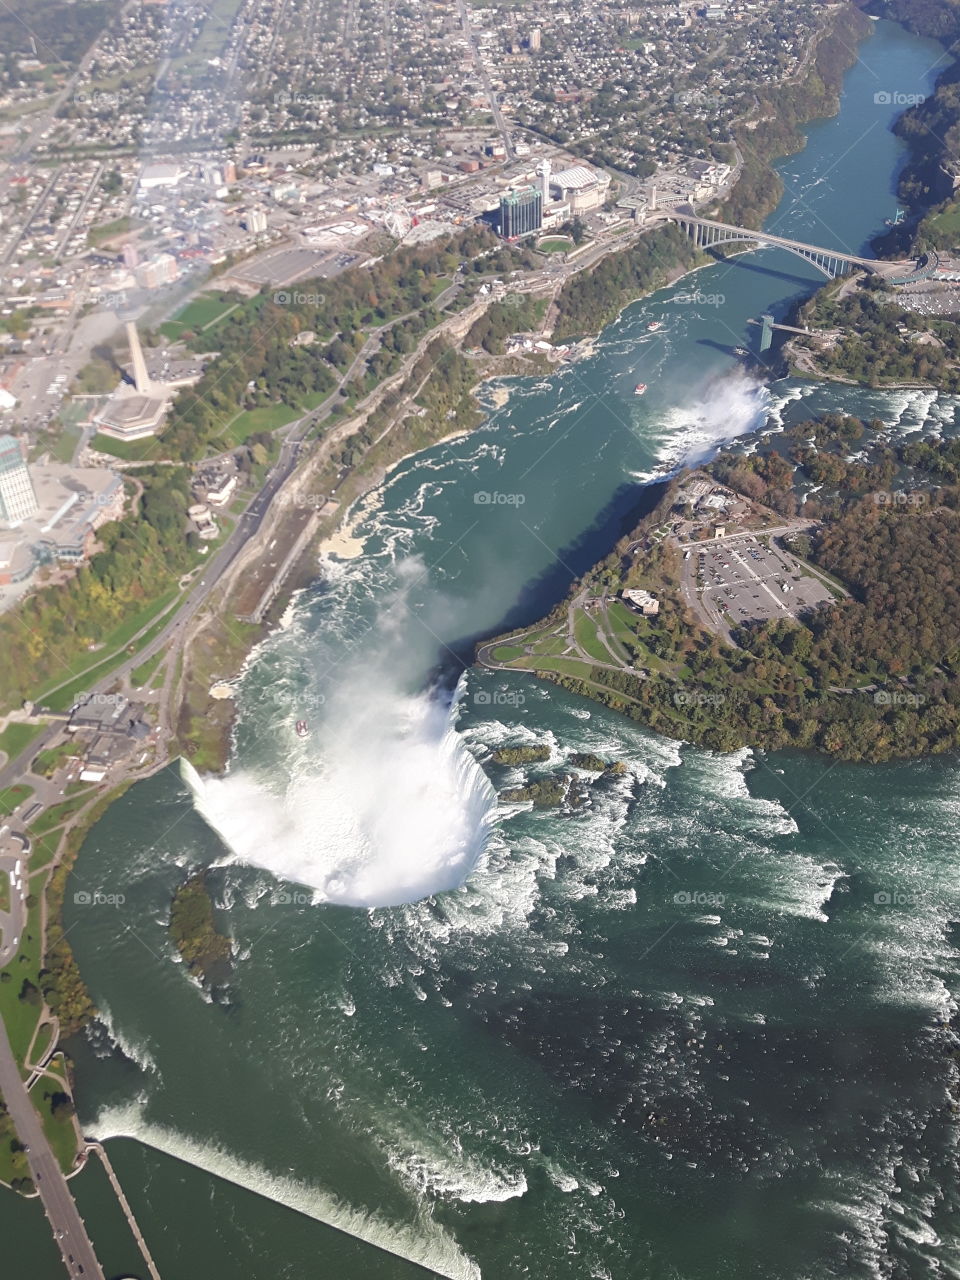 high in the sky hellacopteride over Niagara falls